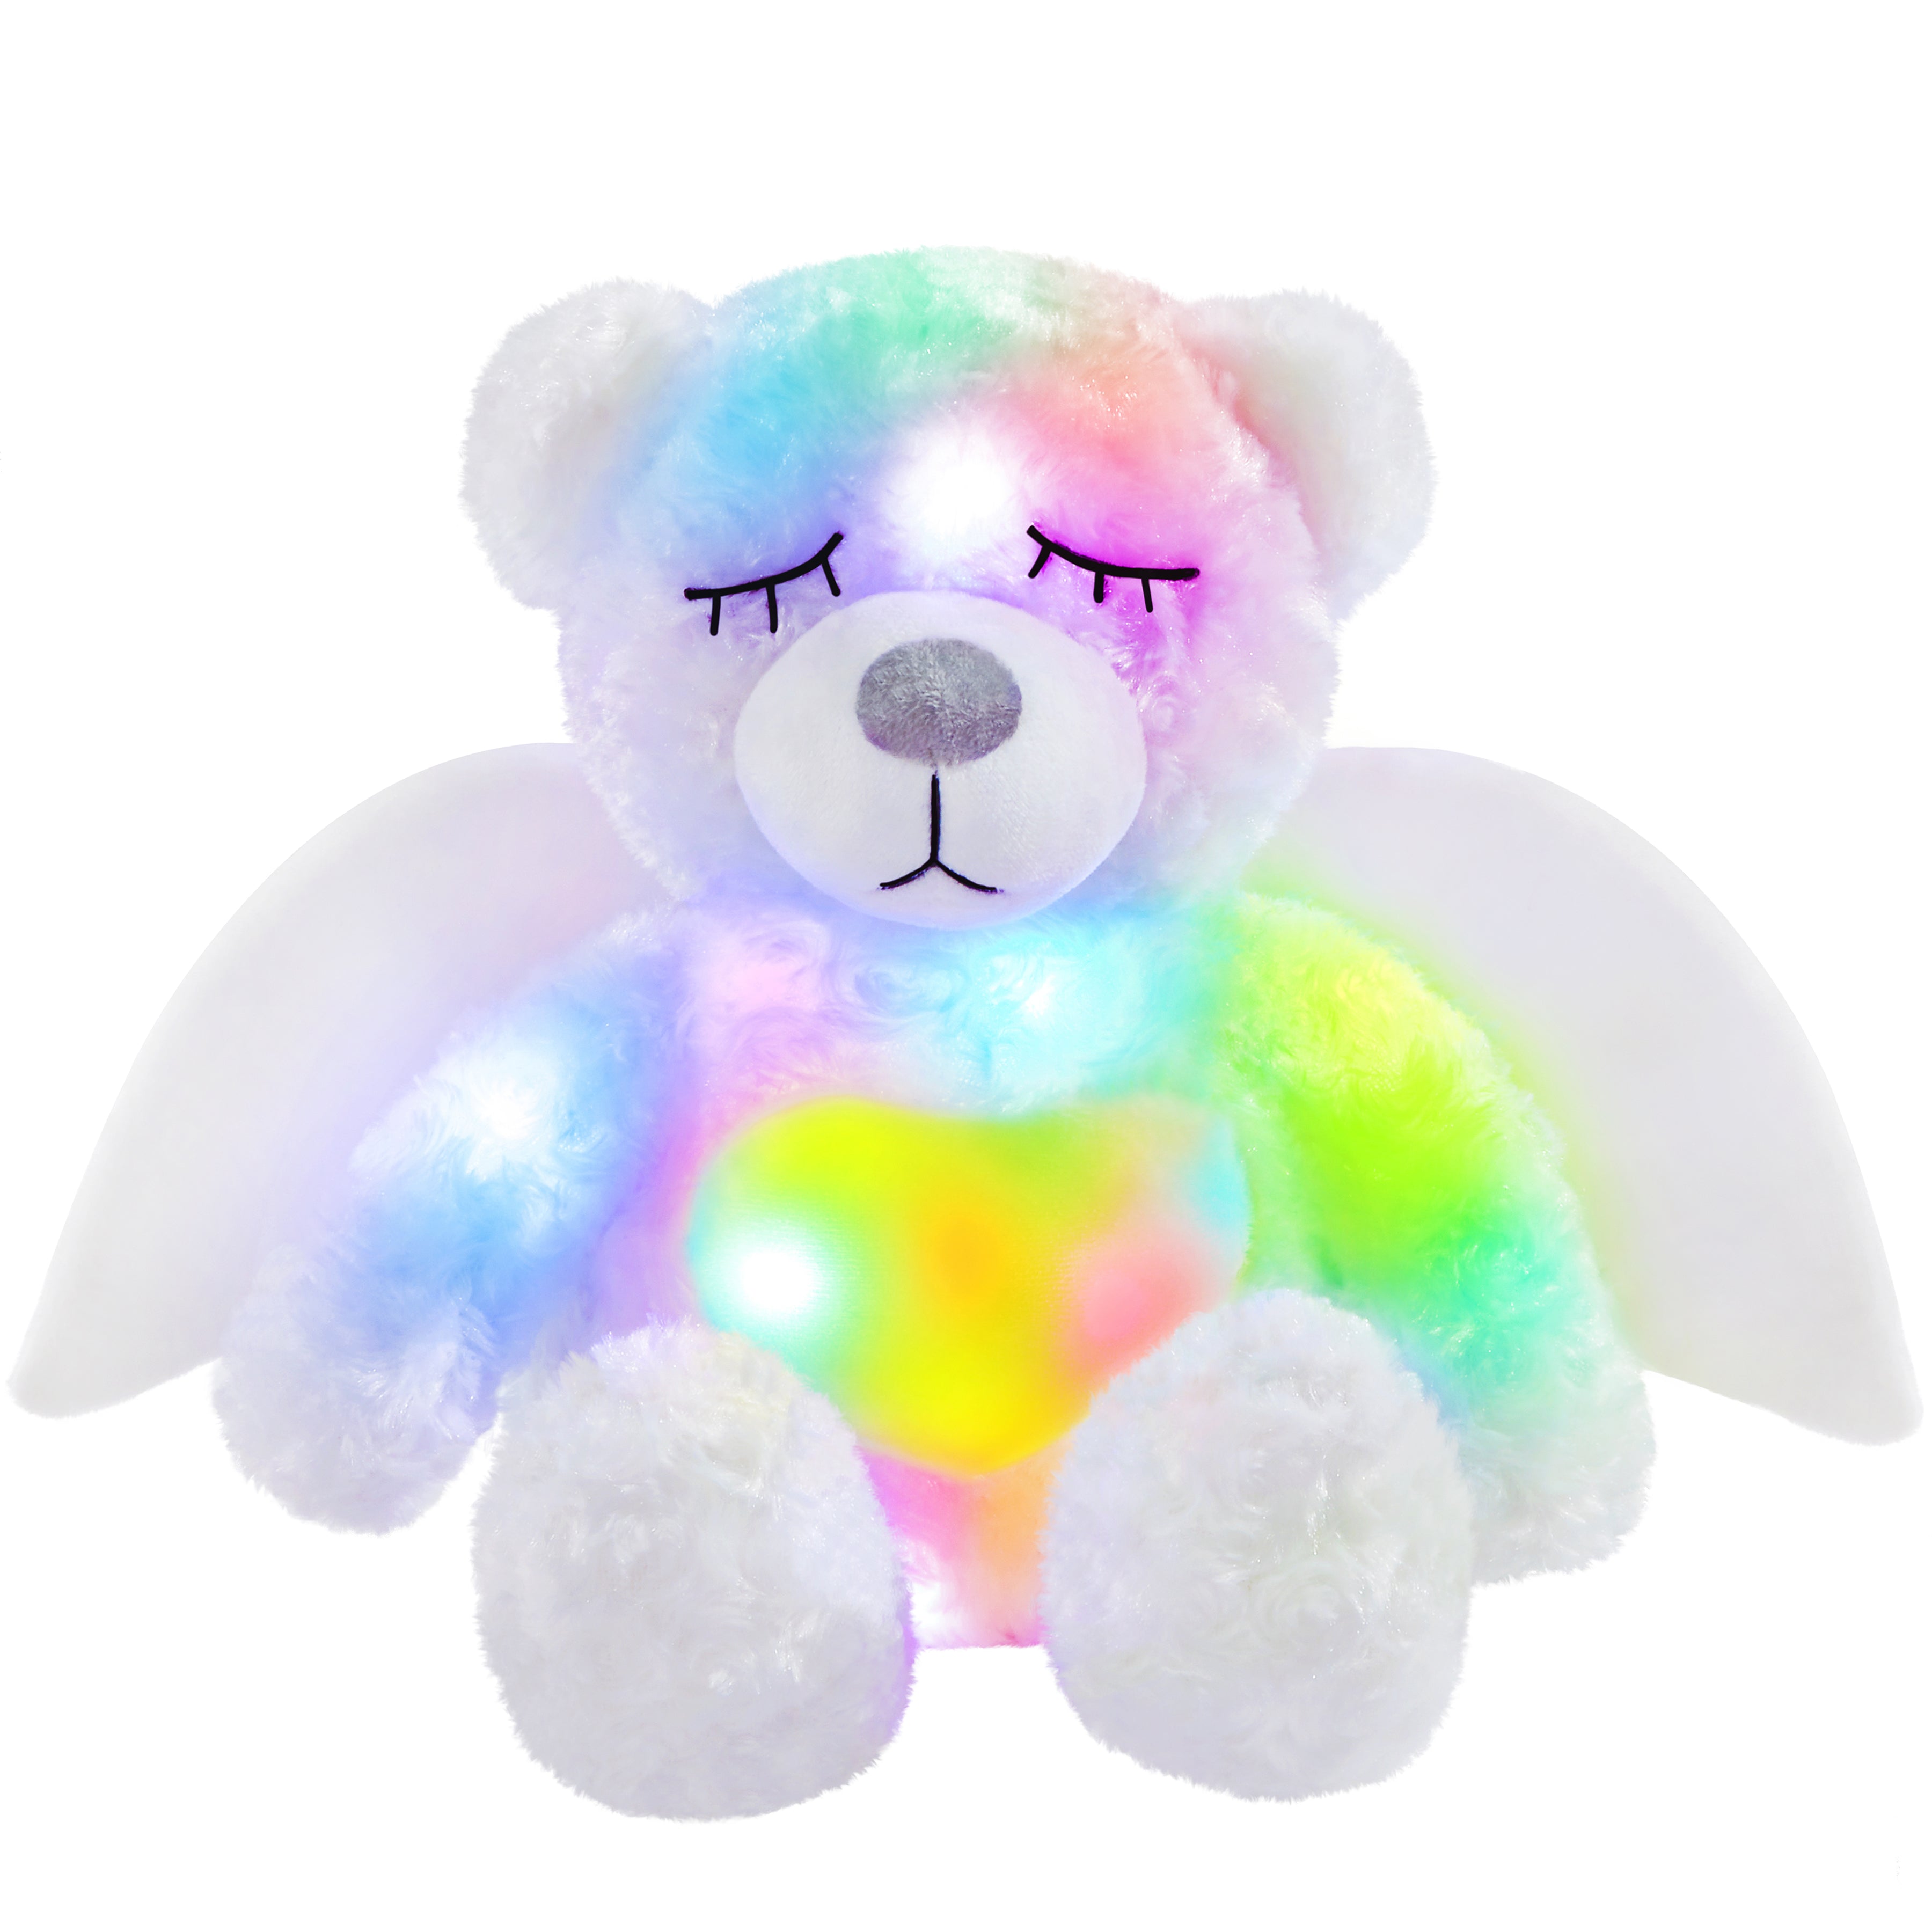 Athoinsu Light up Stuffed Angel Teddy Bear Animals 16'', White - Glow Guards